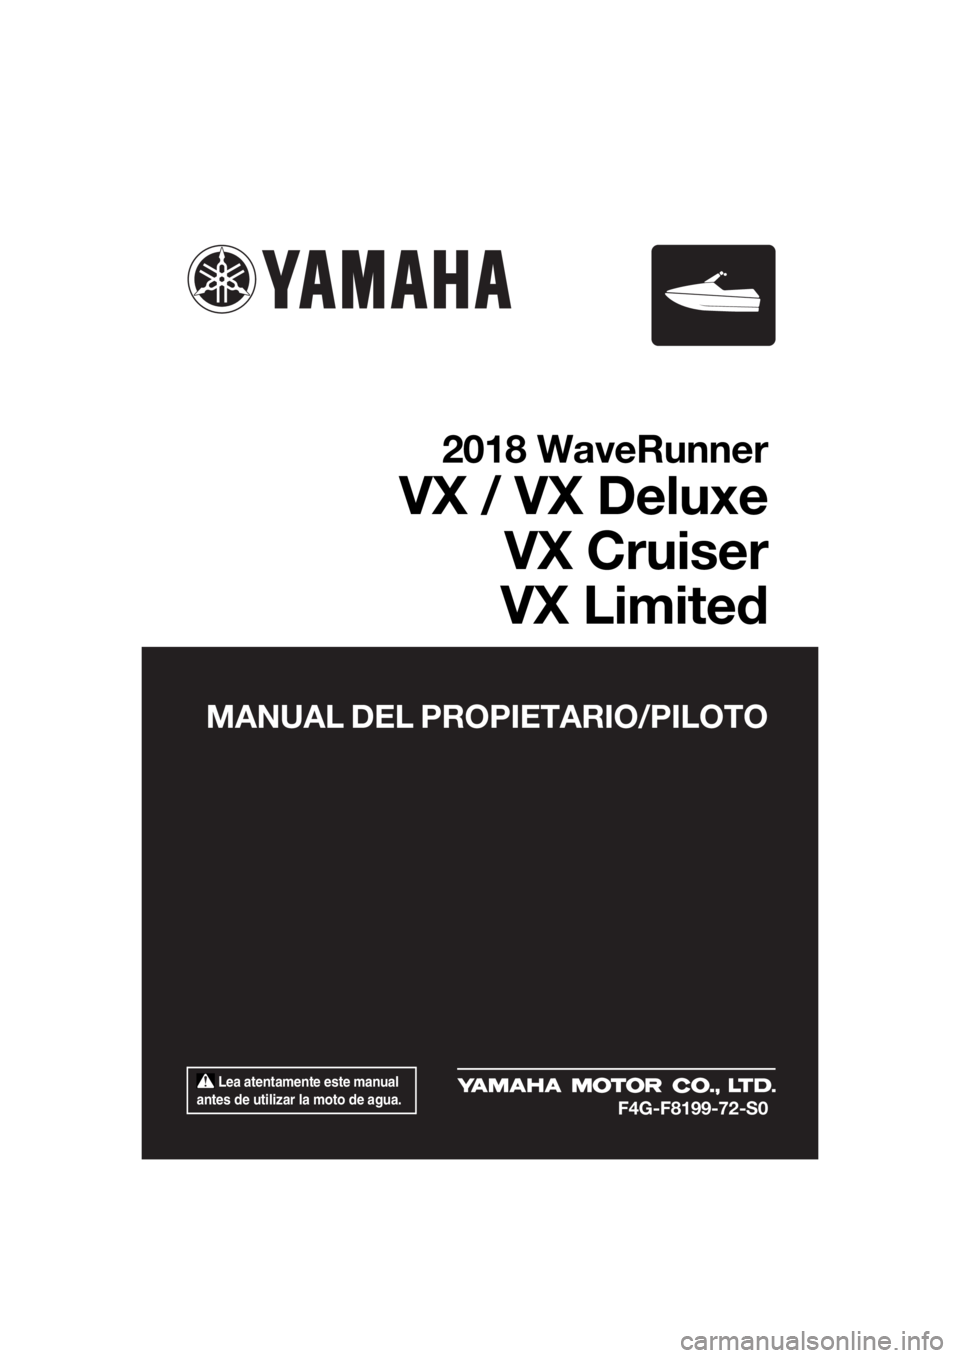 YAMAHA VX 2018  Manuale de Empleo (in Spanish)  Lea atentamente este manual 
antes de utilizar la moto de agua.
MANUAL DEL PROPIETARIO/PILOTO
2018 WaveRunner
VX / VX Deluxe
VX Cruiser
VX Limited
F4G-F8199-72-S0
UF4G72S0.book  Page 1  Monday, July 